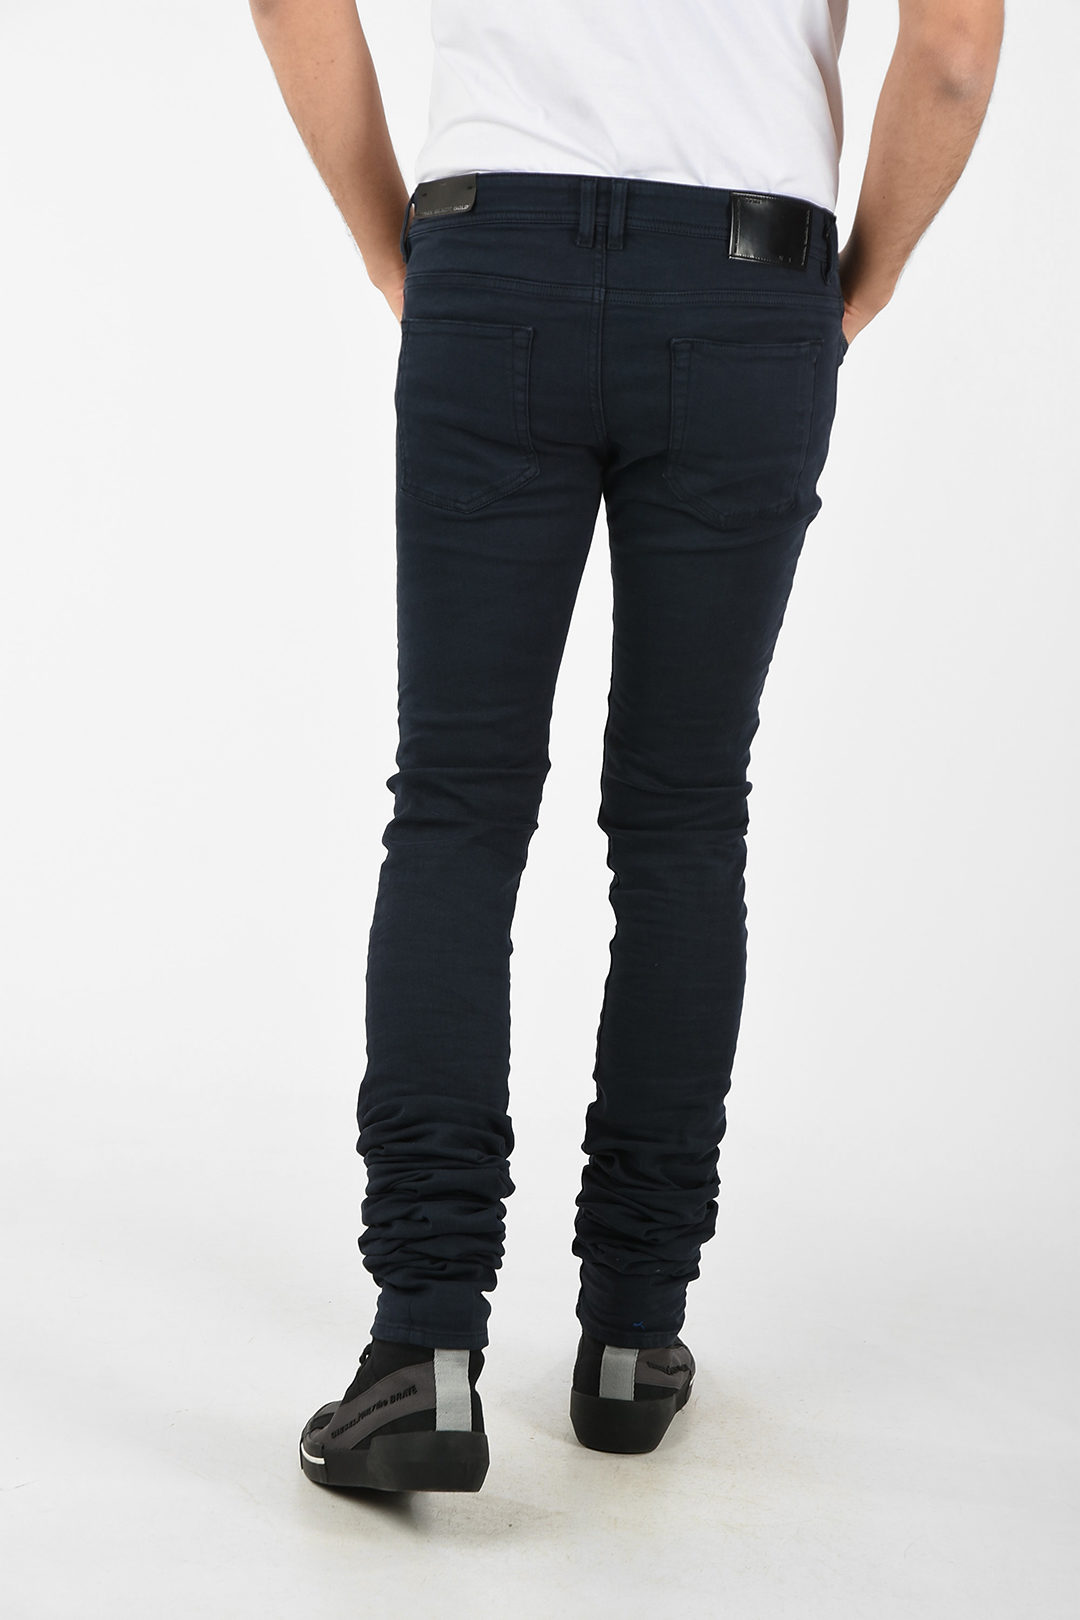 BLACK GOLD 16cm Skinny Fit TYPE-2614 Jeans